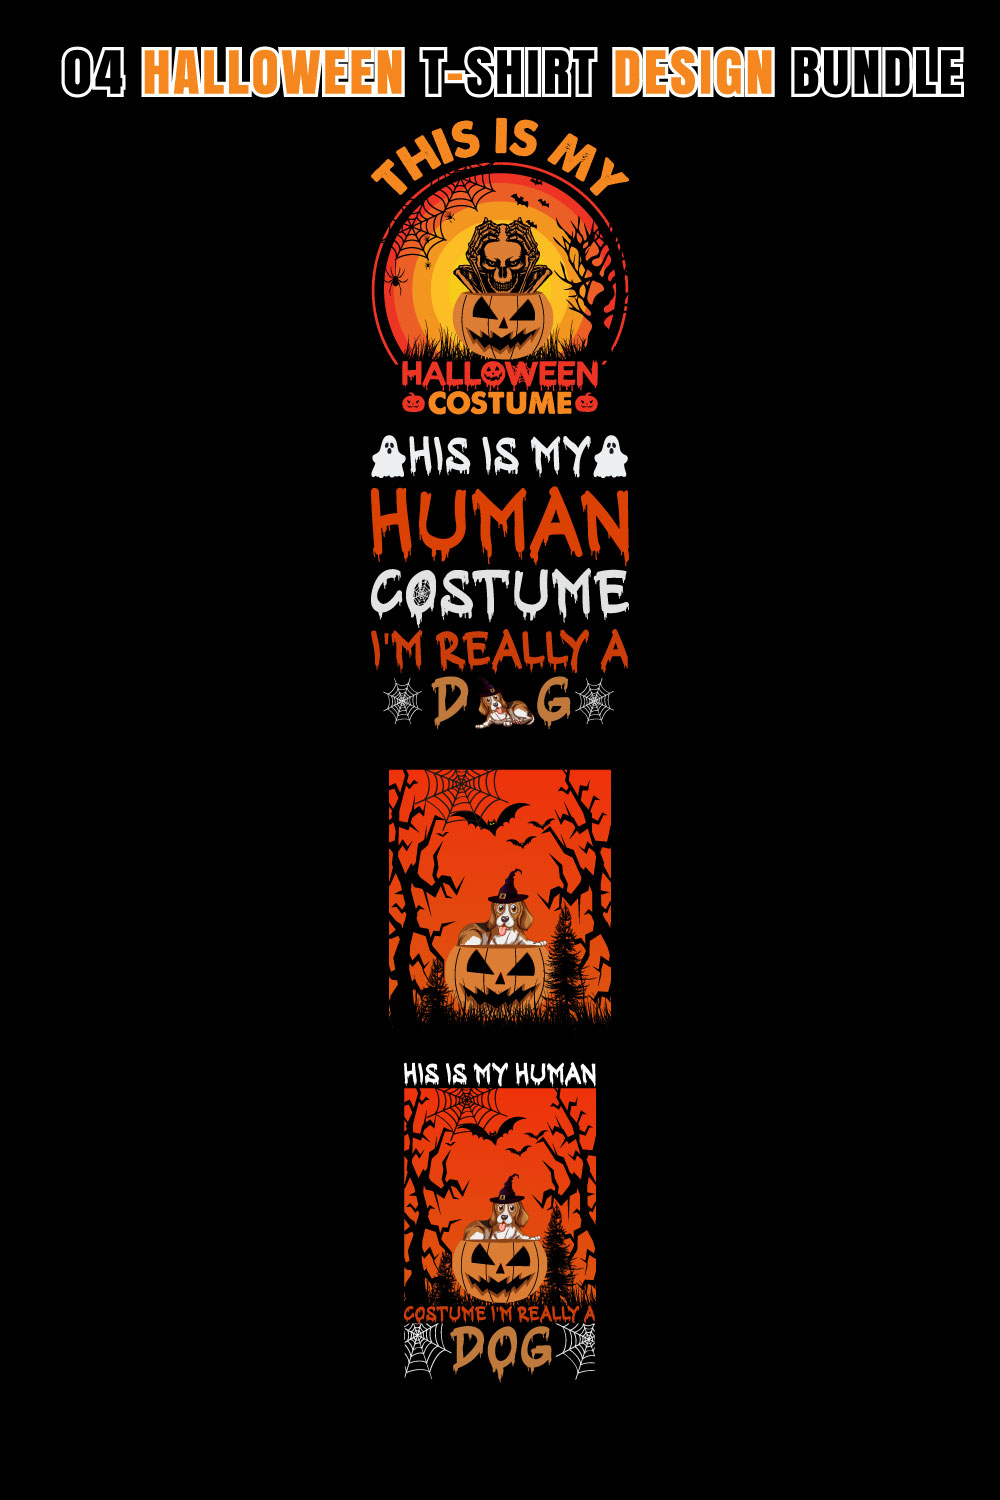 04 Halloween T-Shirt Design Bundle Pinterest Collage image.